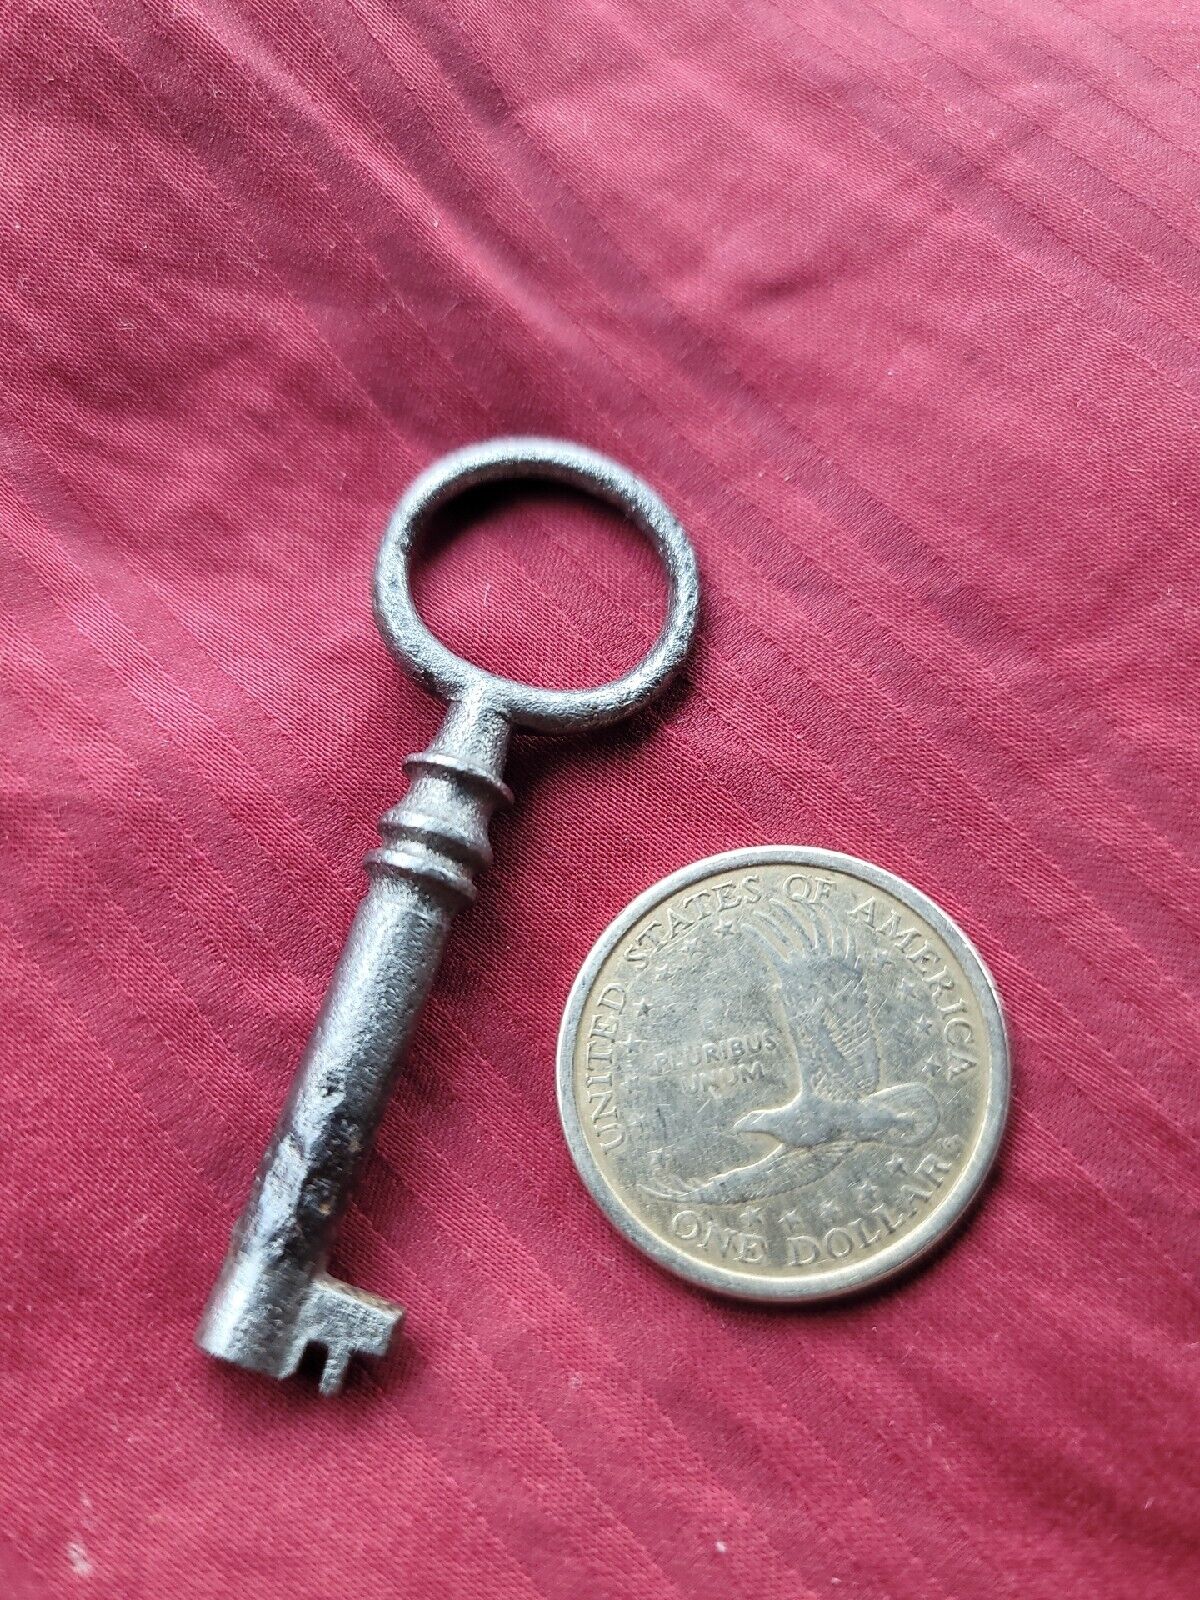 Small Old Skeleton Key Neat Metal Key 